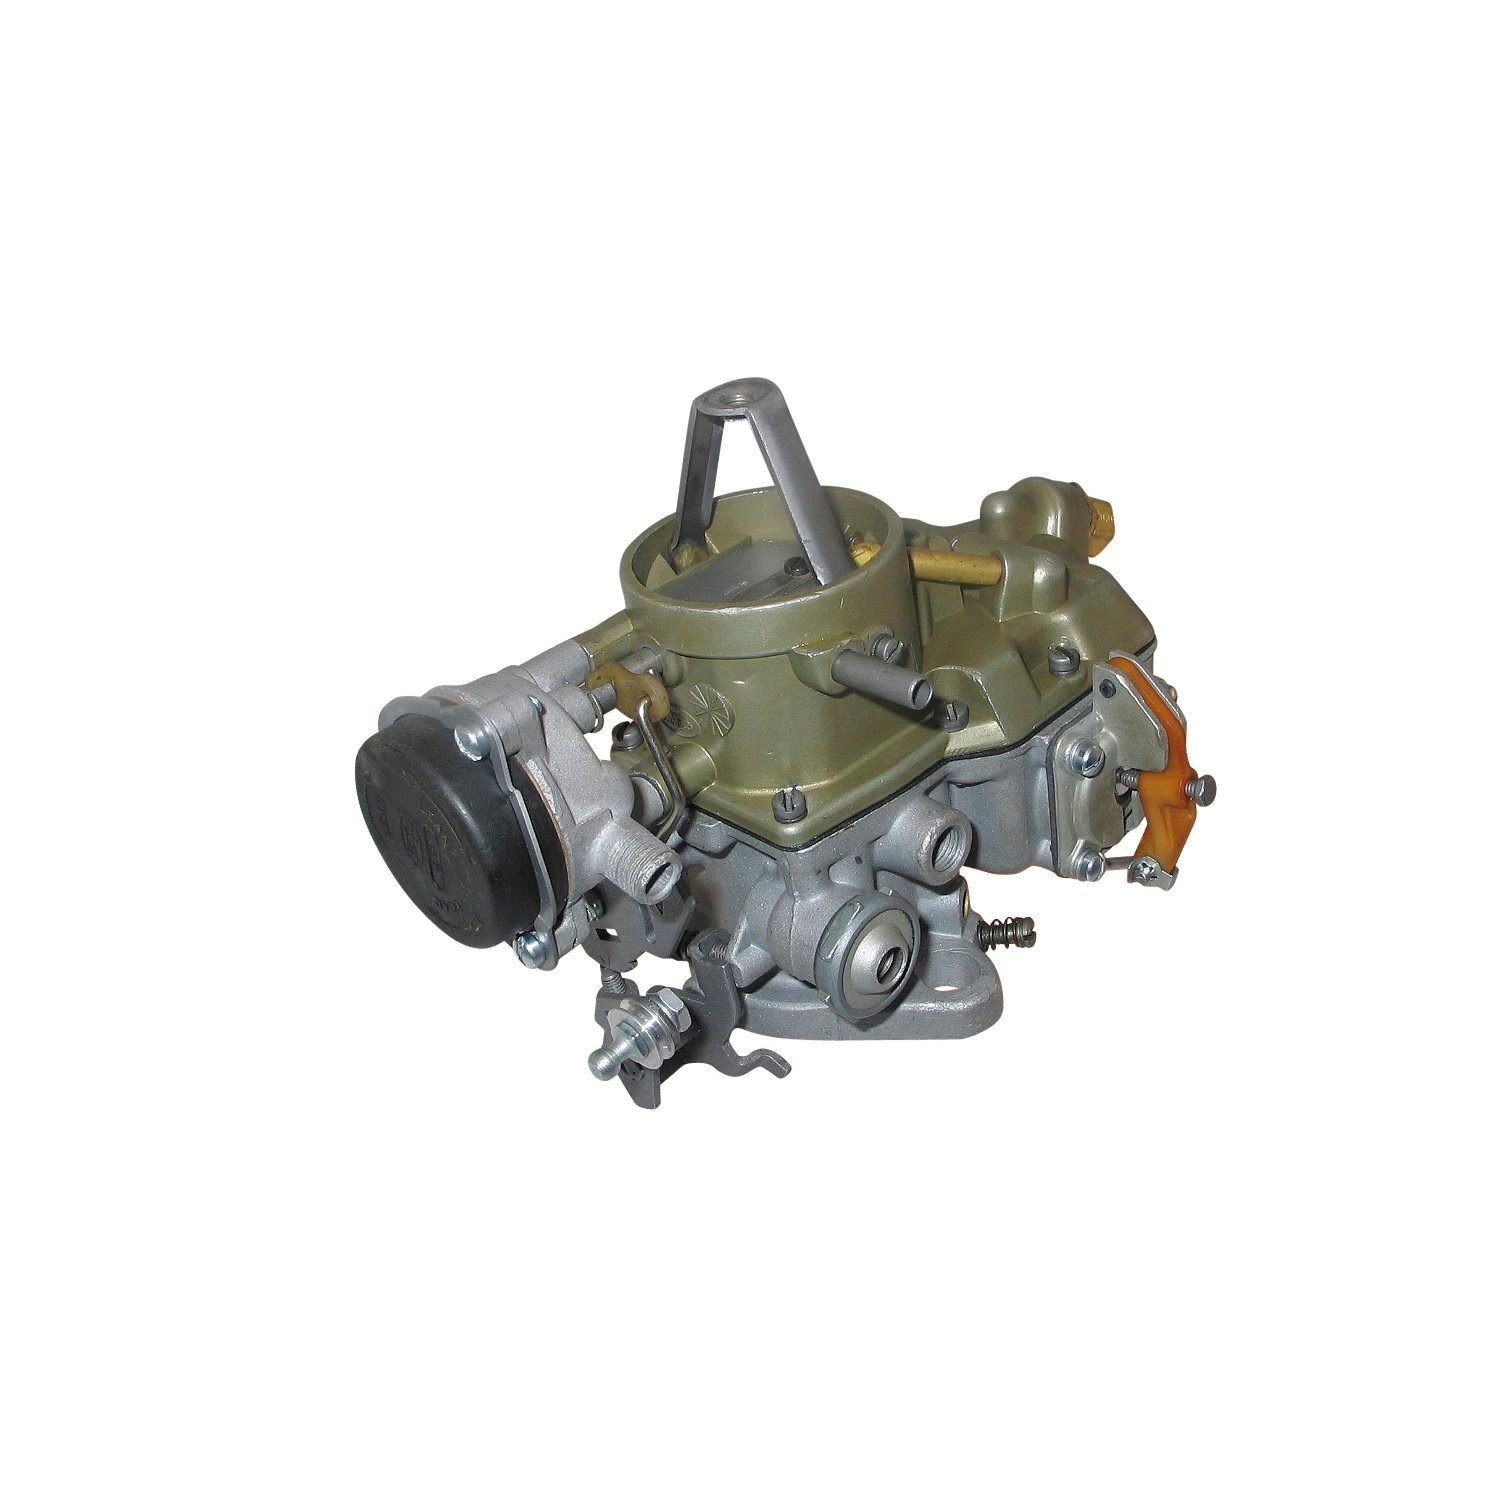 7-7184 Motorcraft Remanufactured Carburetor, 1101A-Style